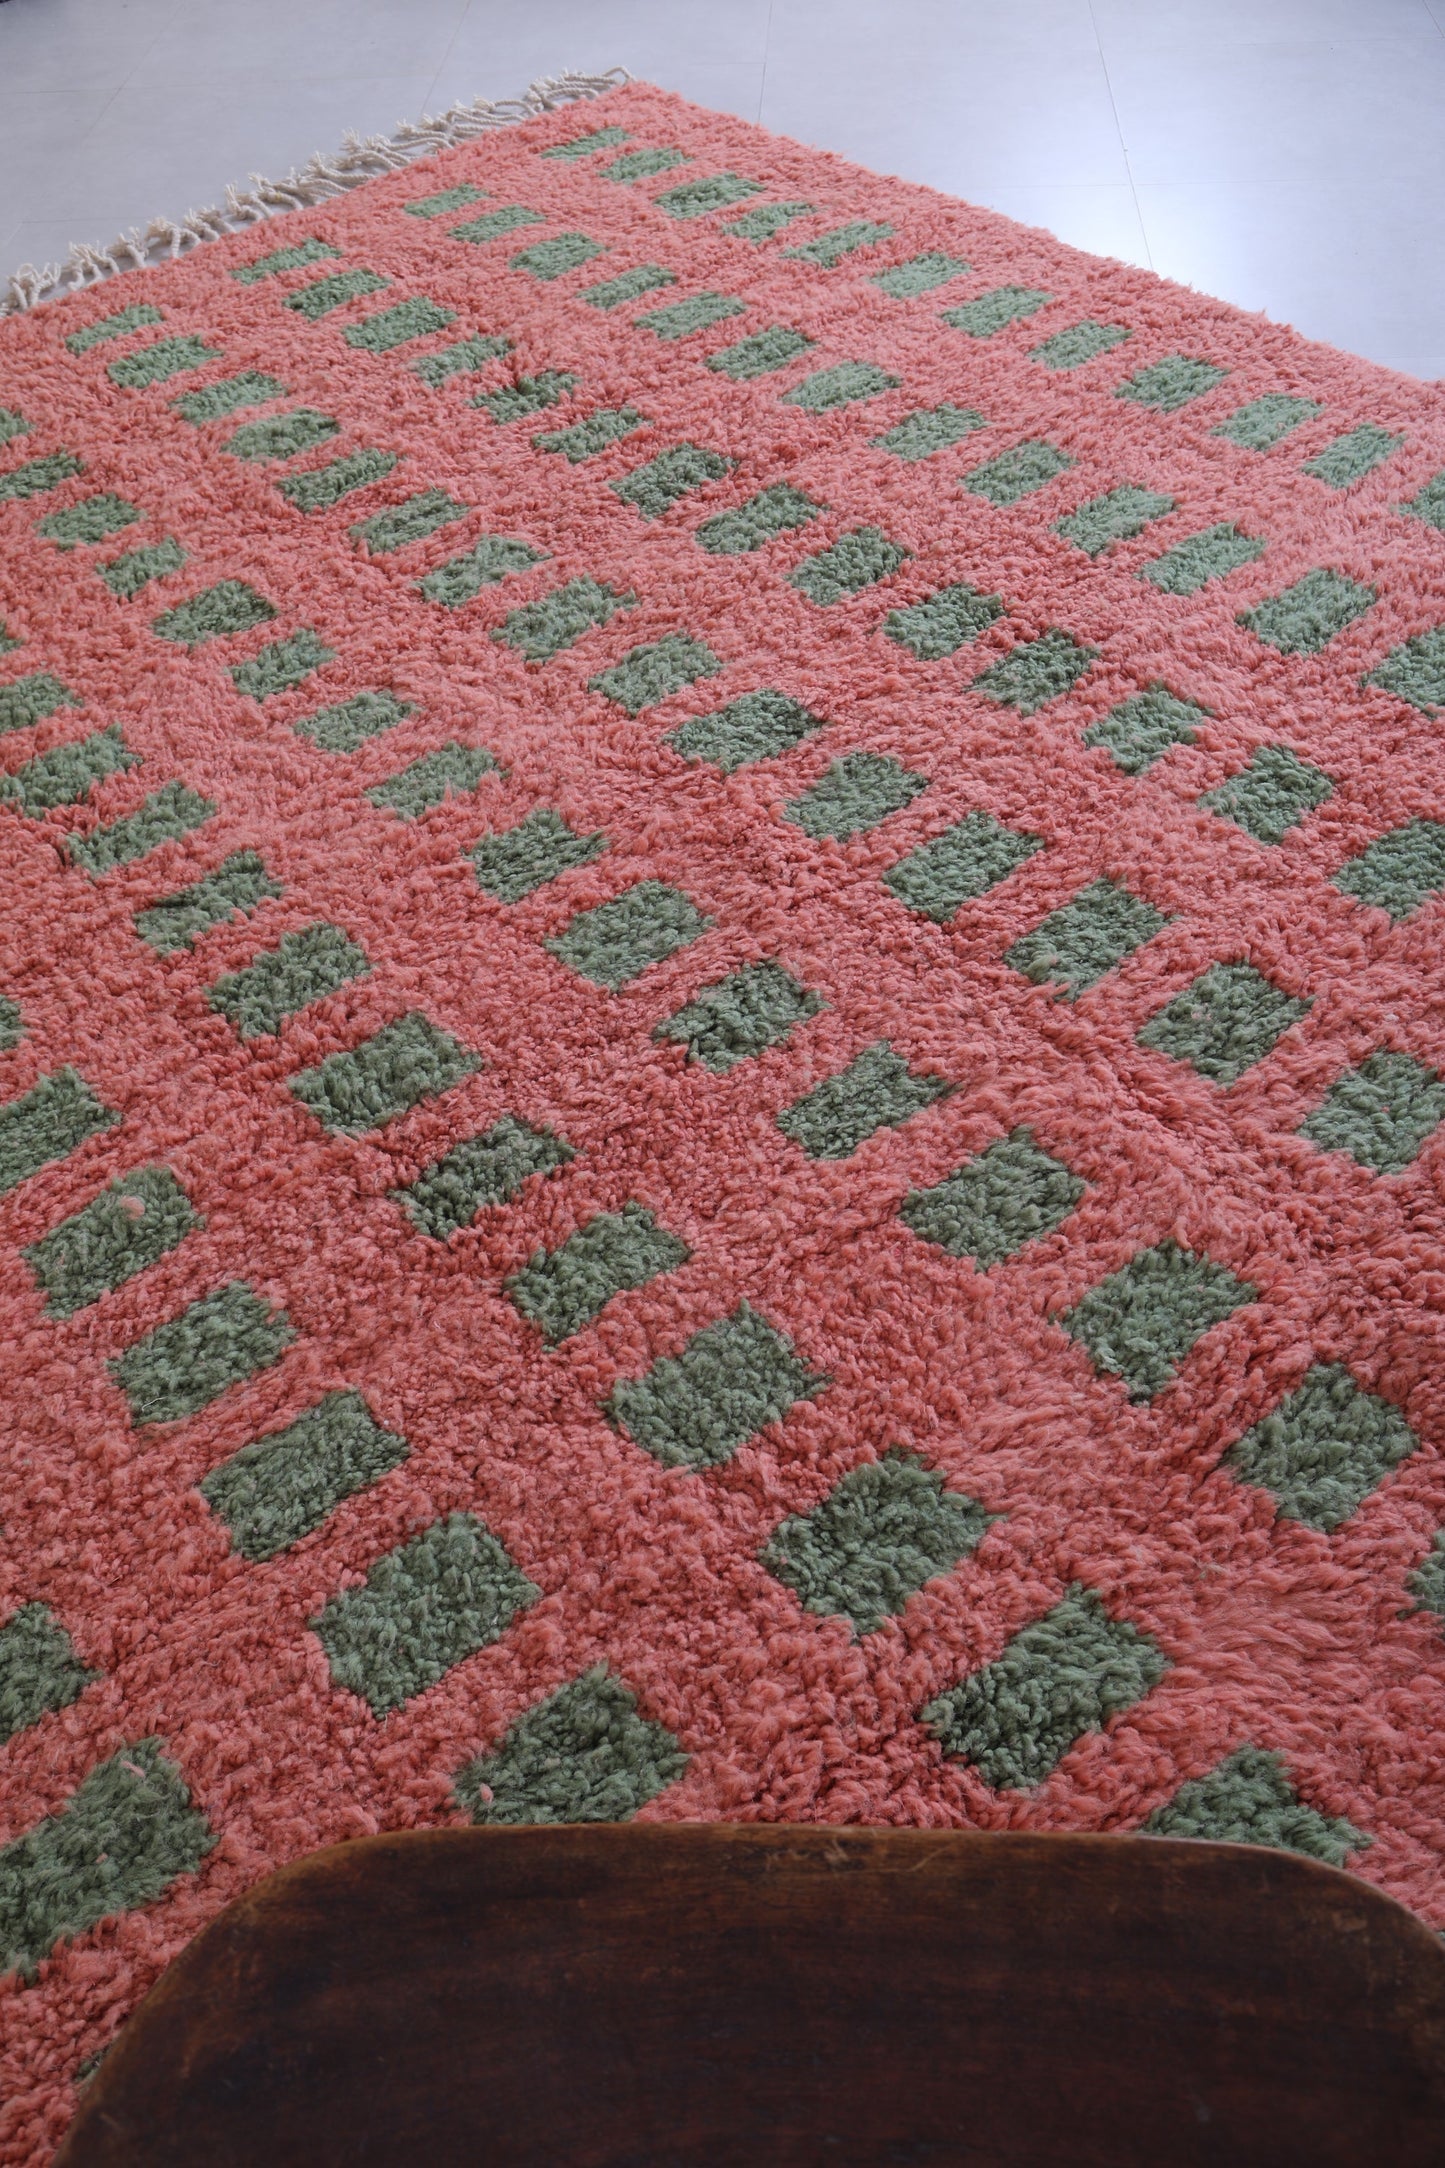 Custom Moroccan carpet Red with green squares - Handmade Berber rug shag